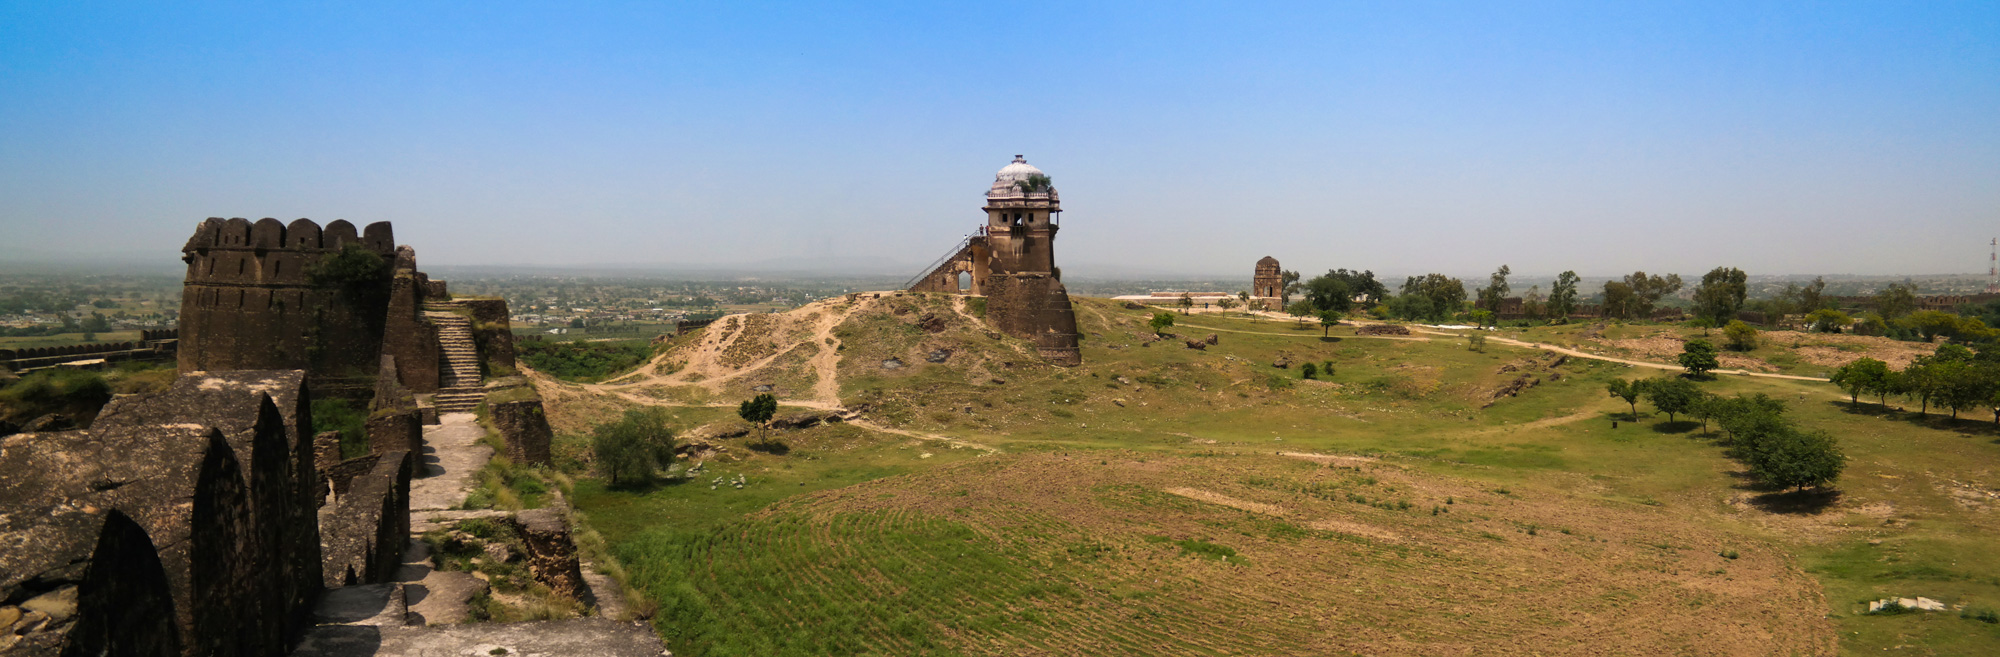 Panorama of Rohtas fortress in Punjab, Pakistan. 